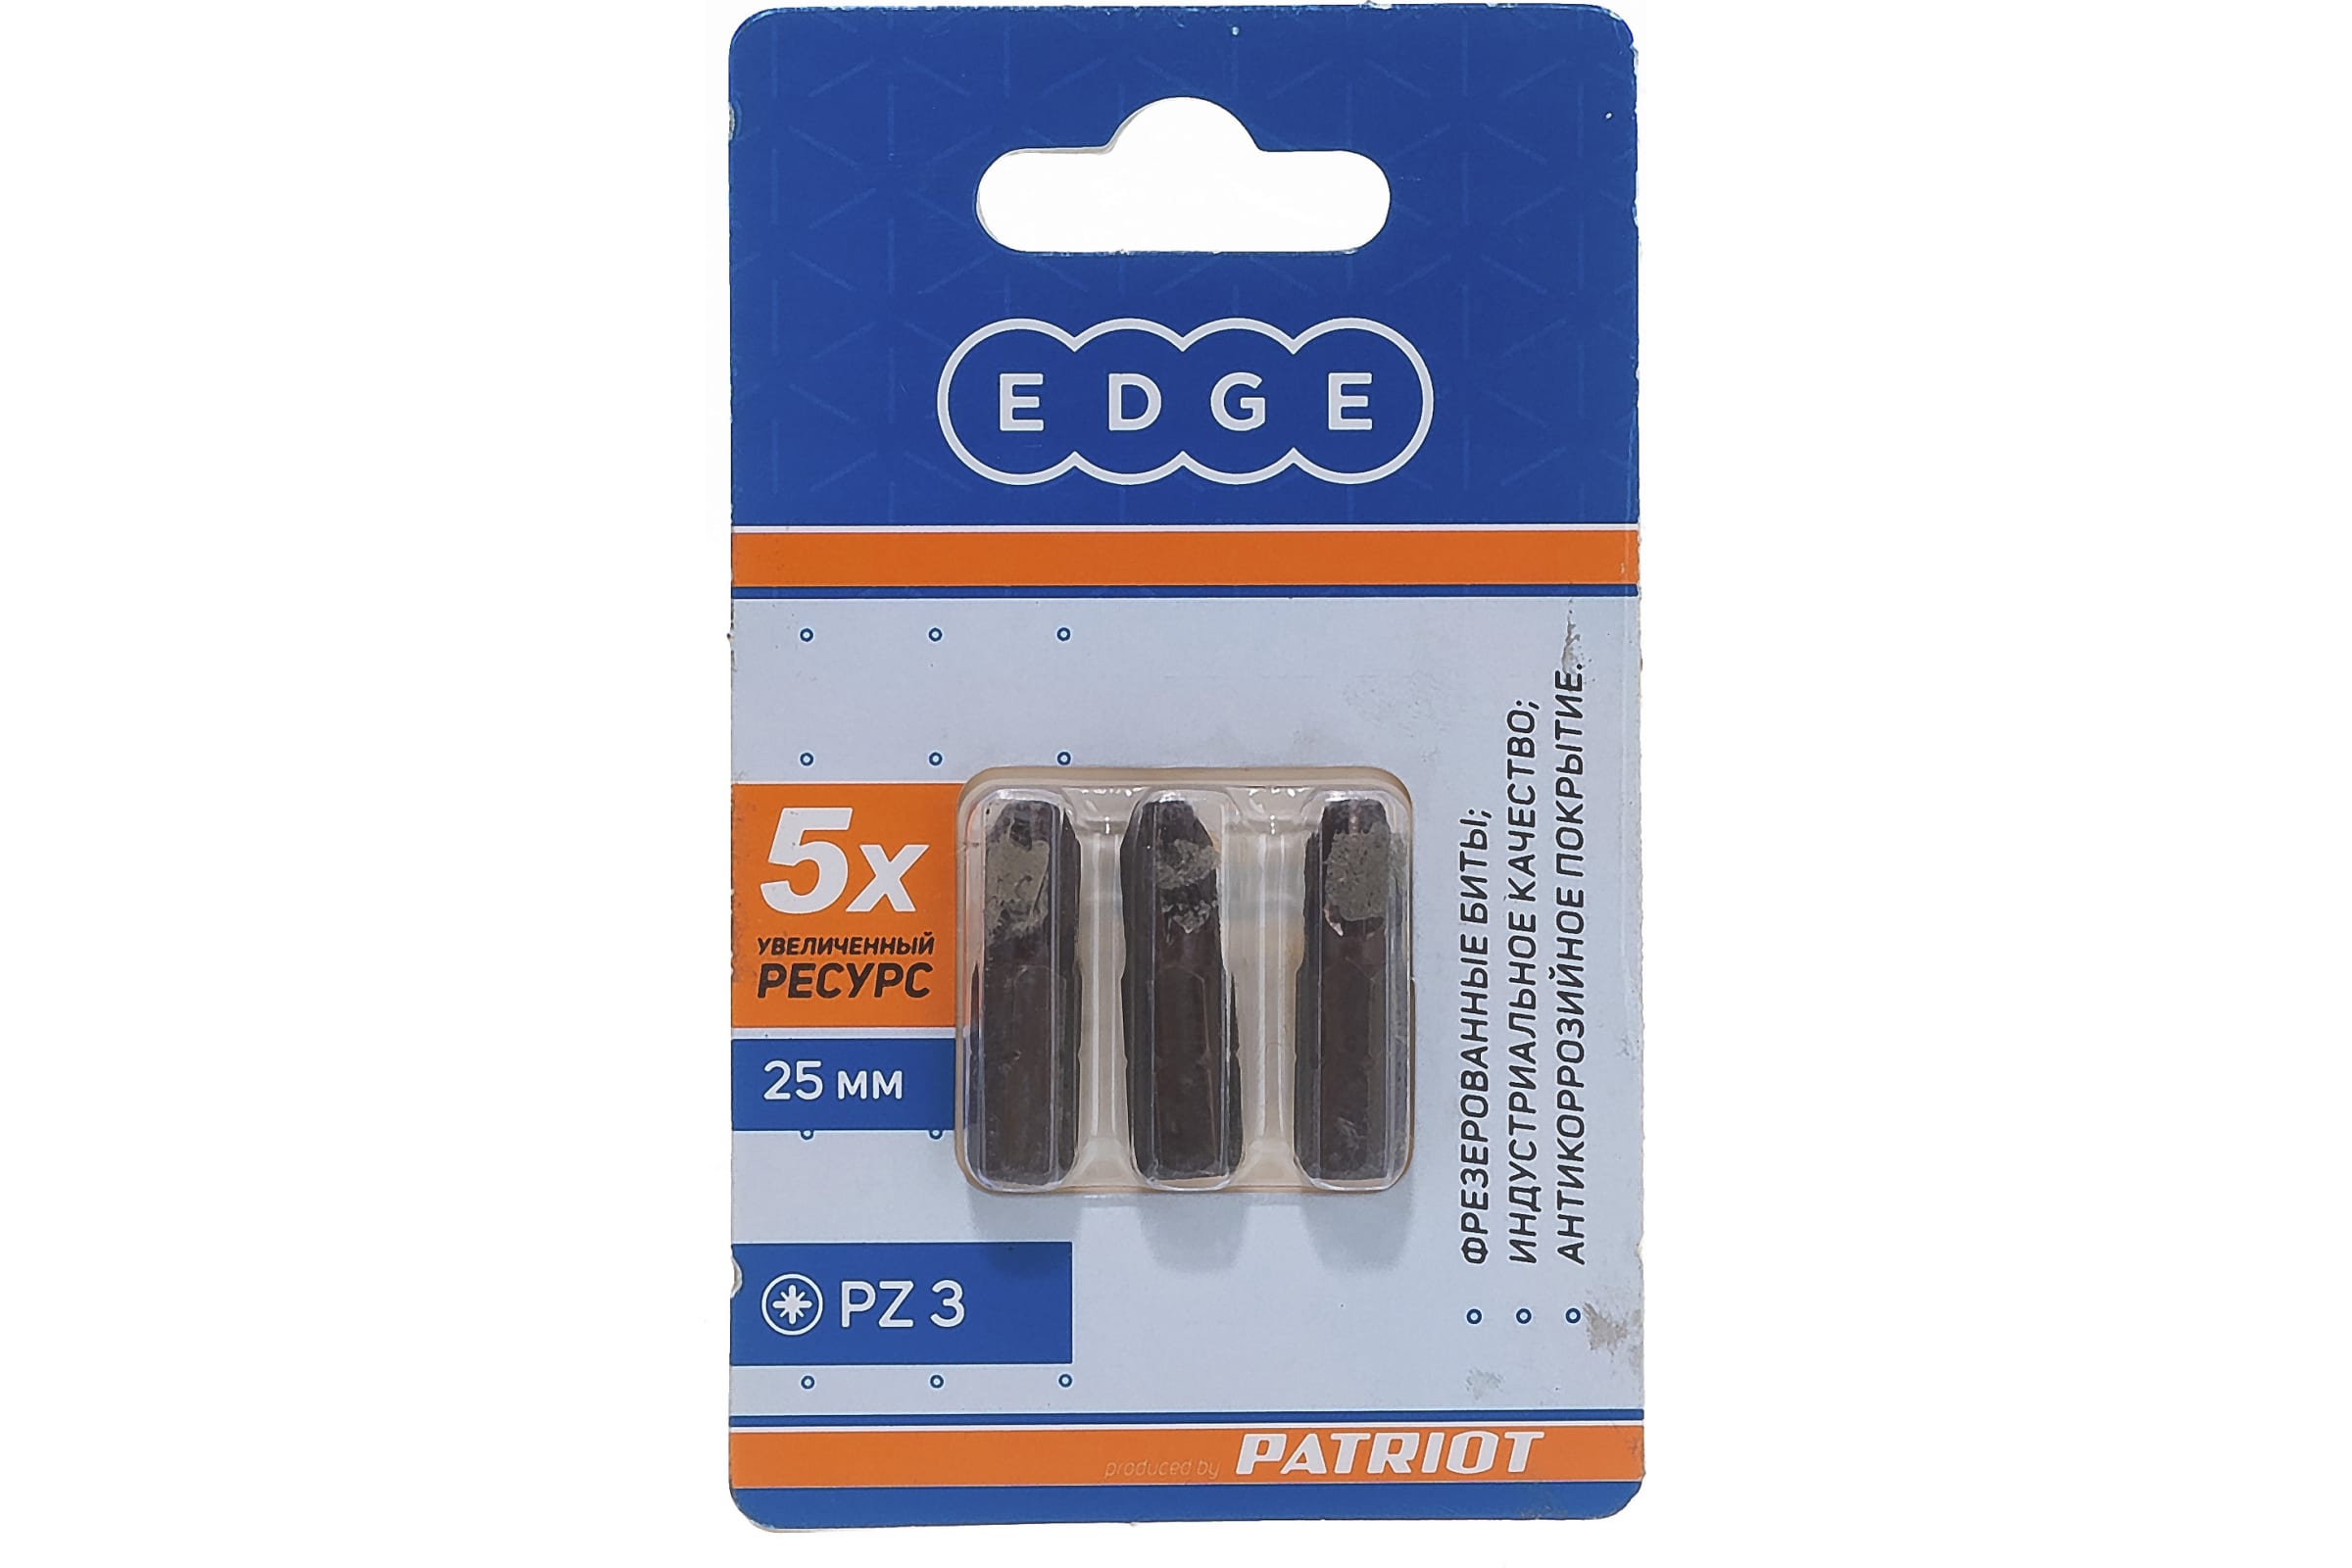 EDGE by PATRIOT Бита PZ3 длина 25 мм, 3шт в блистере 818010014 бита edge by patriot